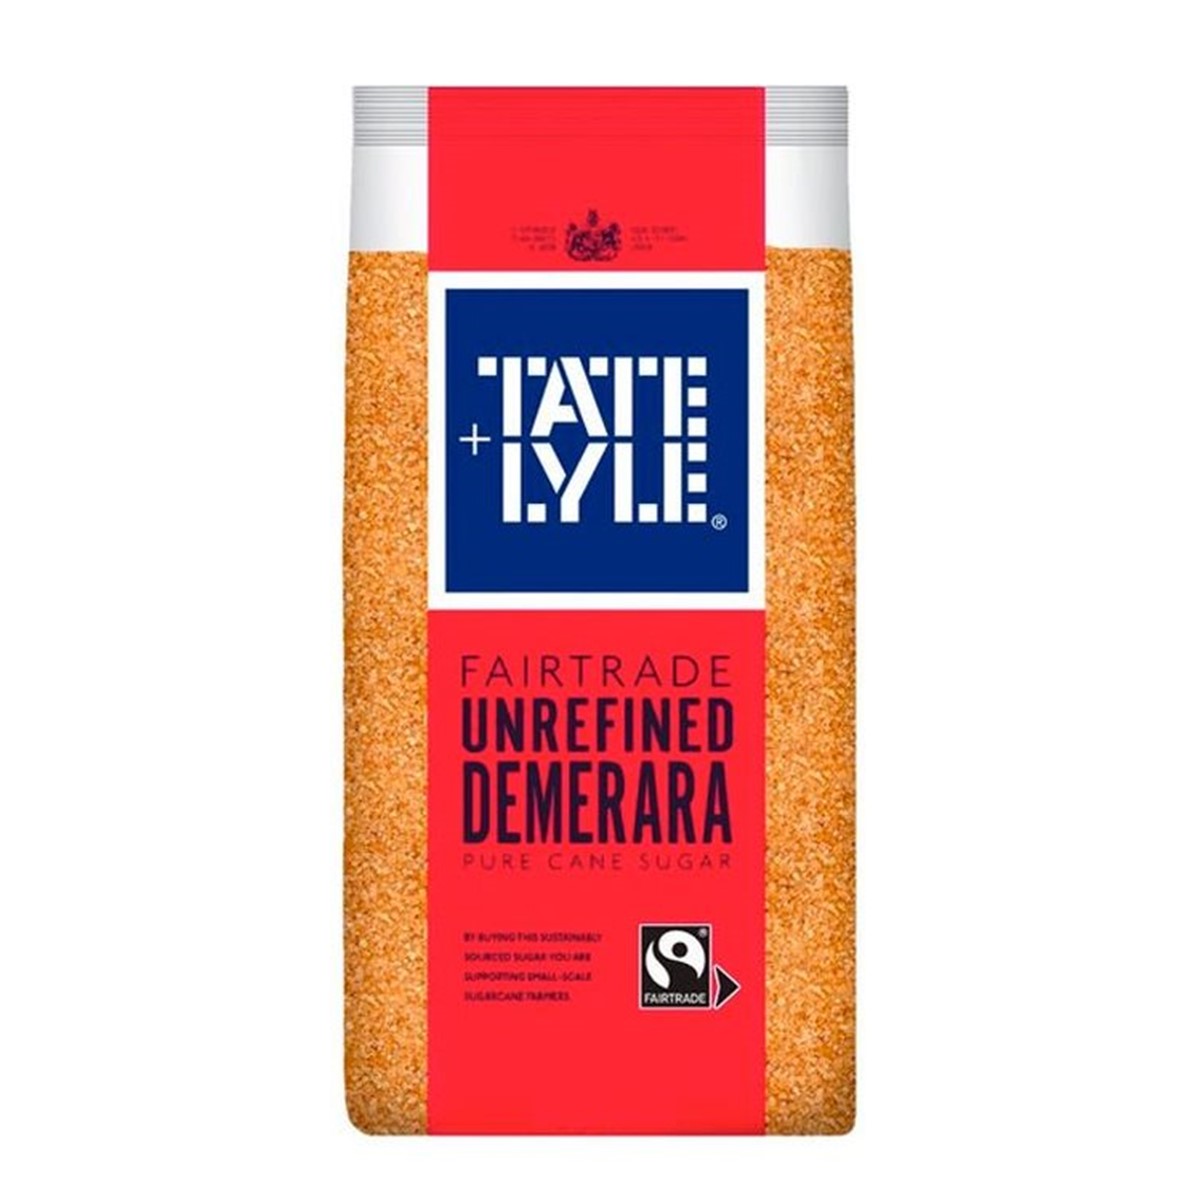 Tate & Lyle Demerara Fairtrade Sugar - 1kg bag [FT]